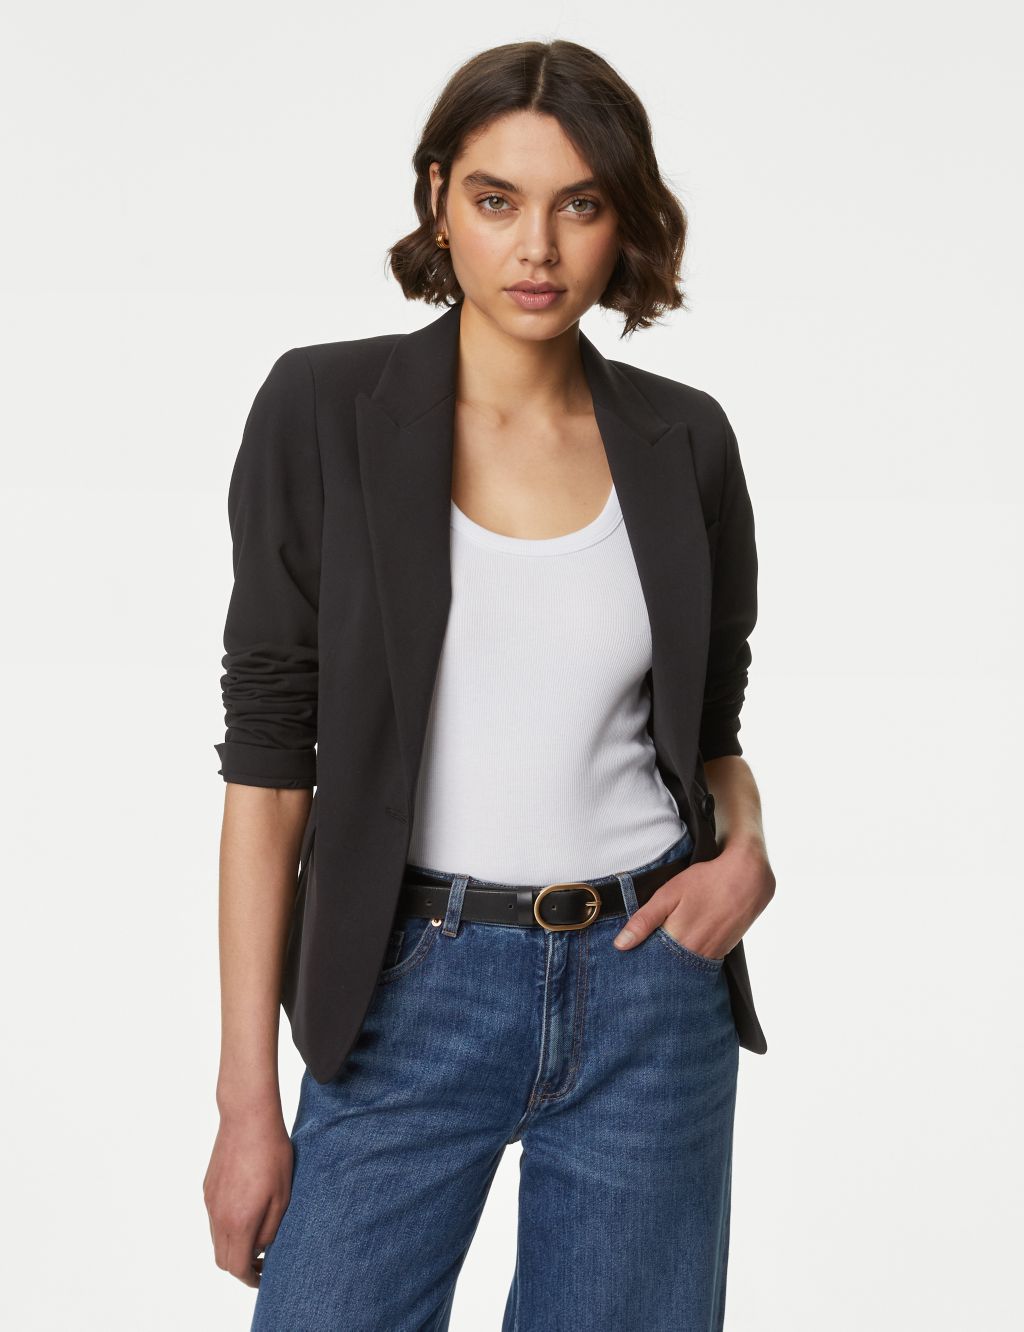 Shop Women's Black Coats | Women's Black Jackets | M&S